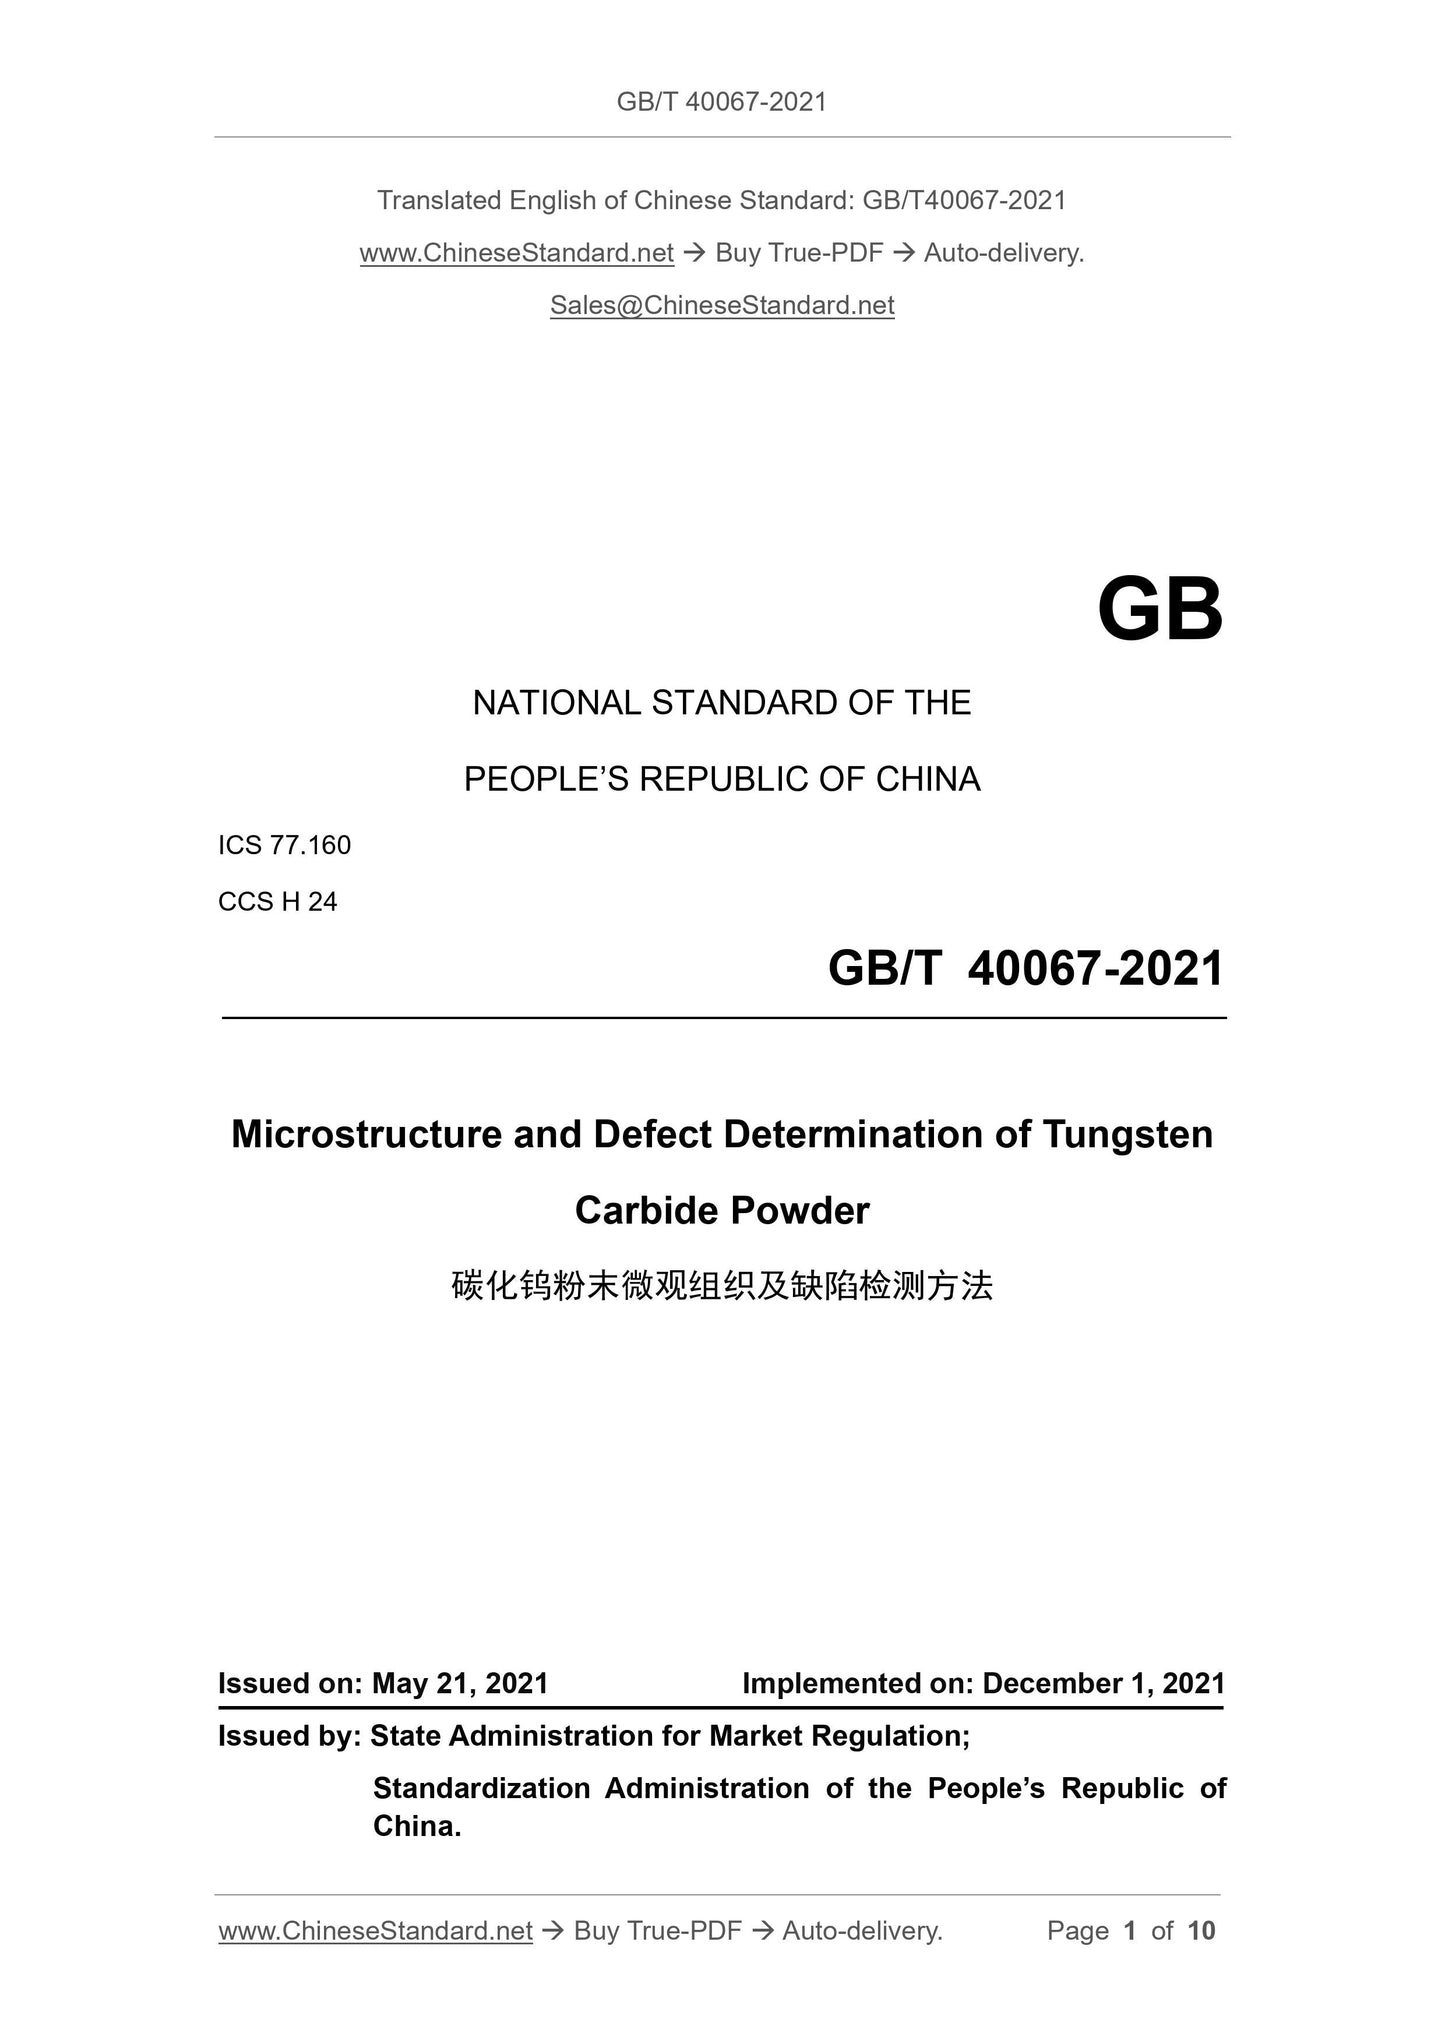 GBT40067-2021 Page 1